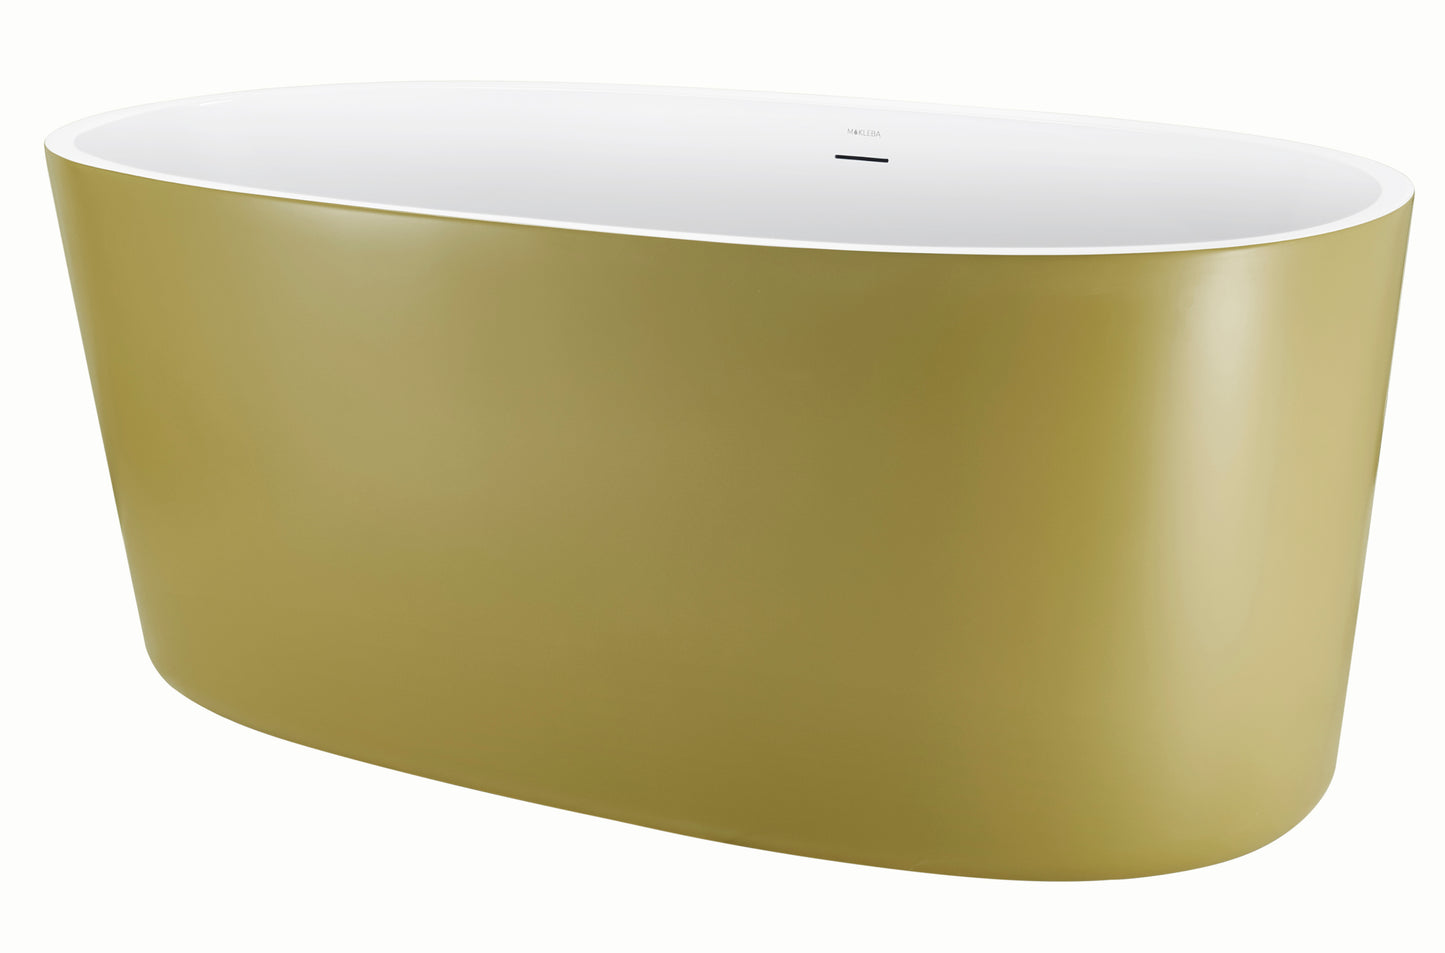 63" 100% Acrylic Freestanding Bathtub，Contemporary Soaking Tub，White inside and gold outside